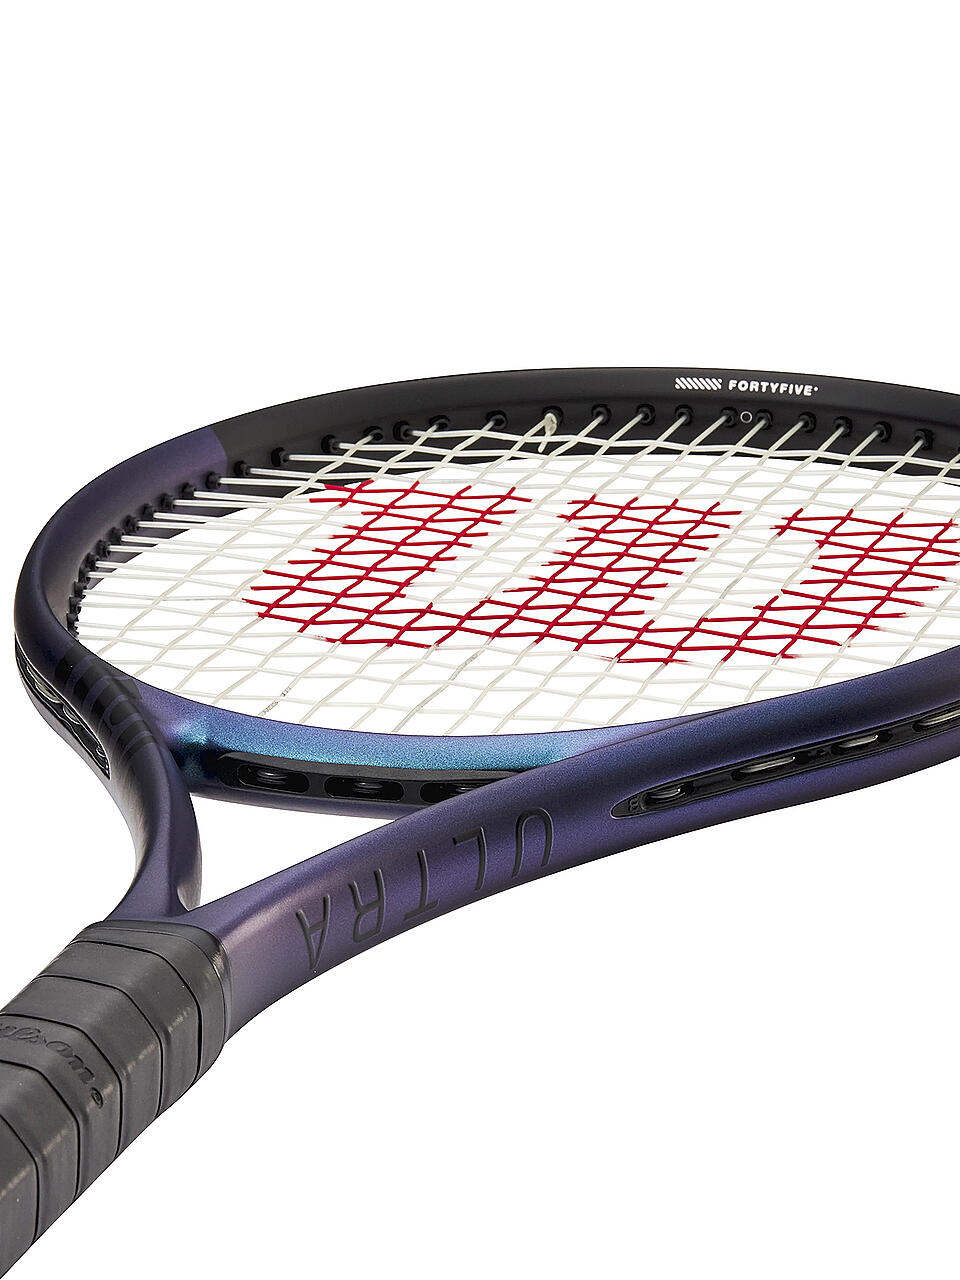 WILSON | Tennisschläger Ultra 100 v4 unbesaitet | blau